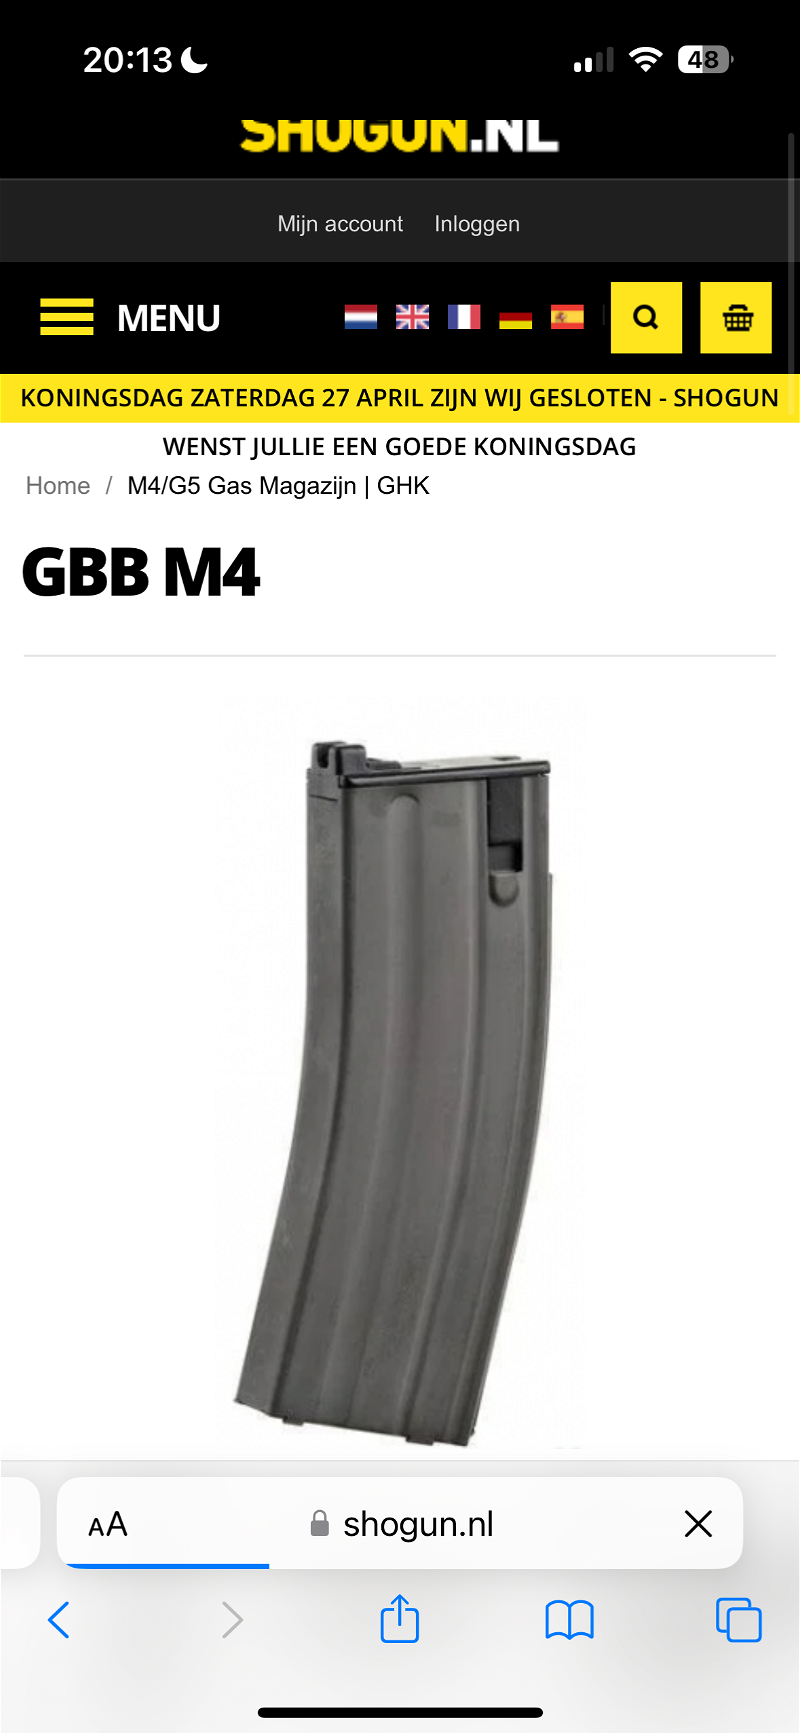 Image 1 for M4 Gbbr magazijnen gezocht